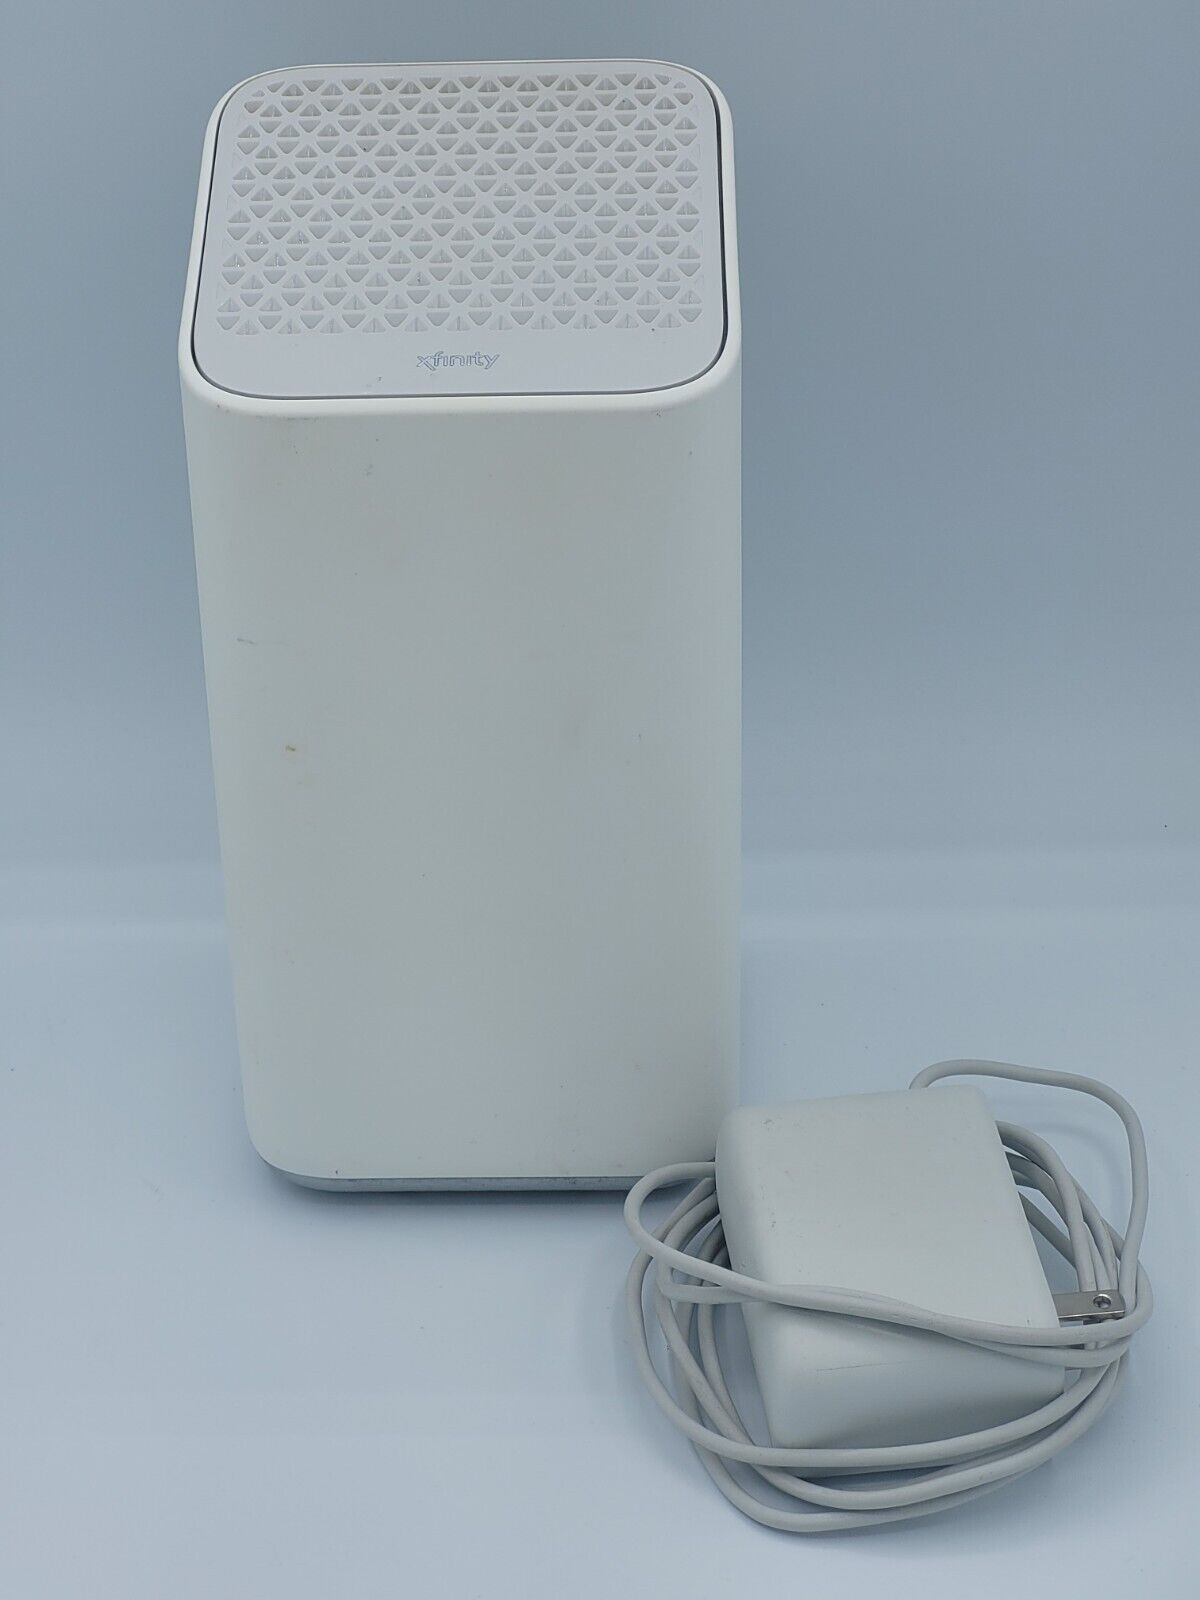 Comcast Xfinity XB7-T GIGABIT Modem WiFi Router Power Cord. Powers on